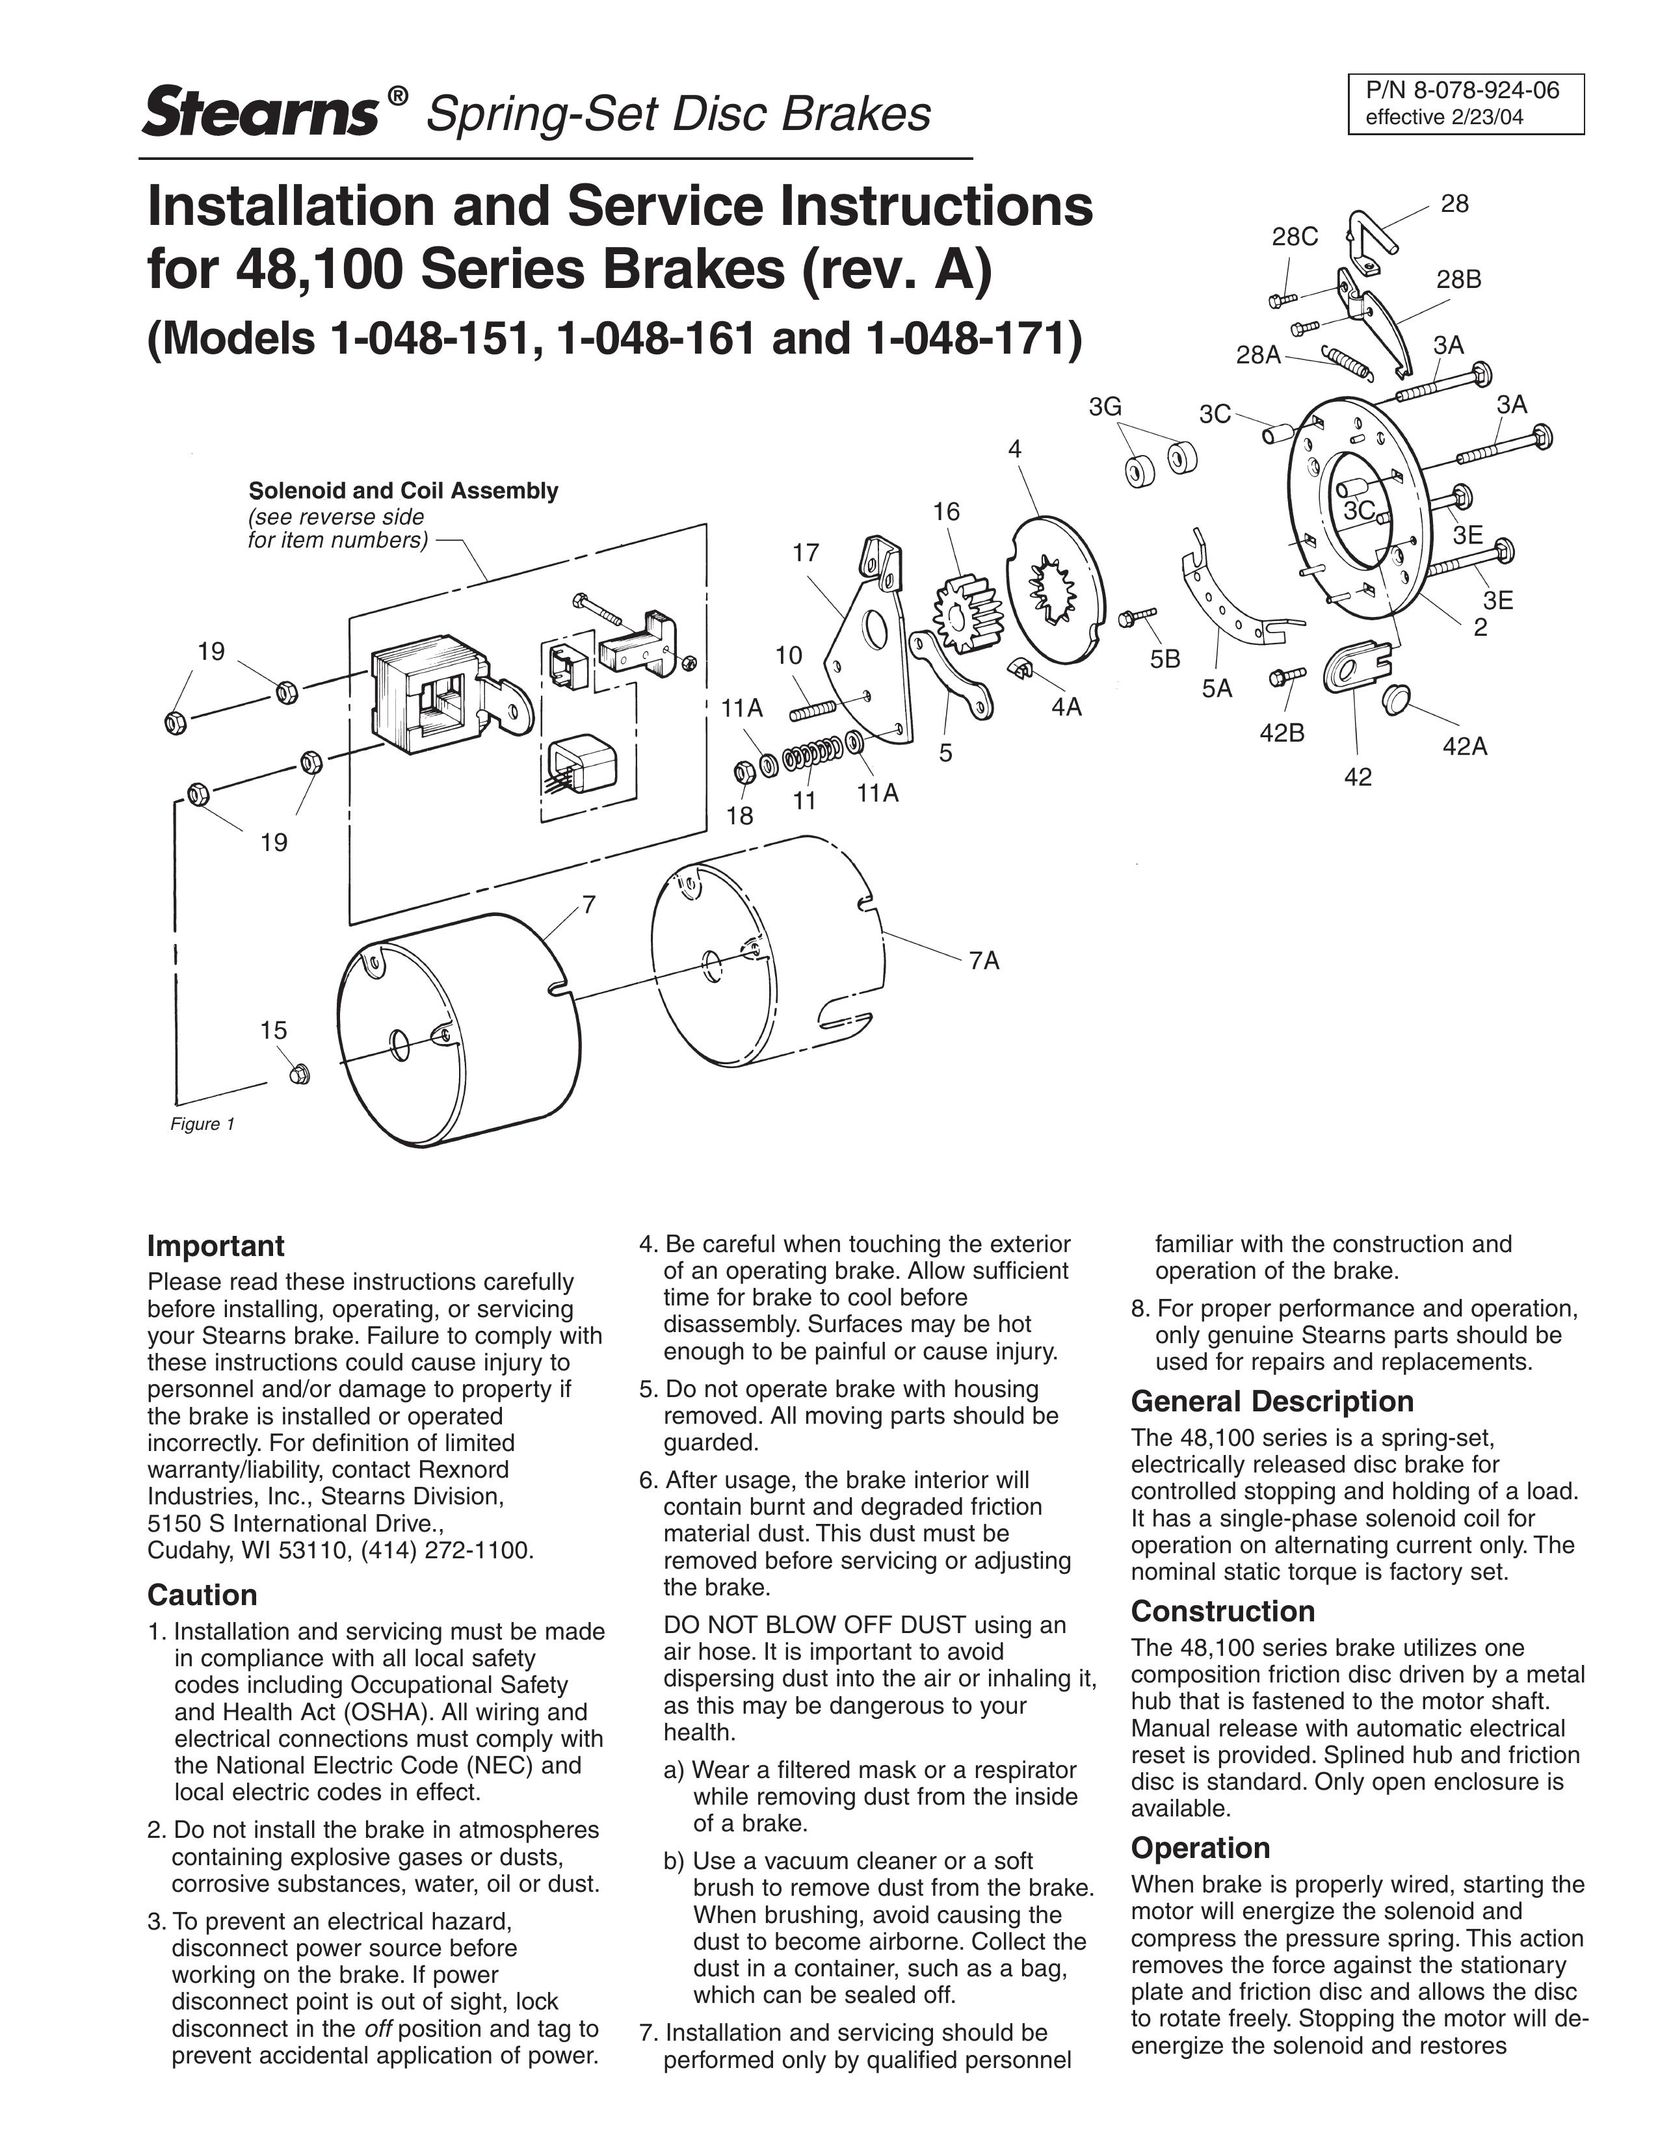 Stearns 1-048-161 Nail Gun User Manual